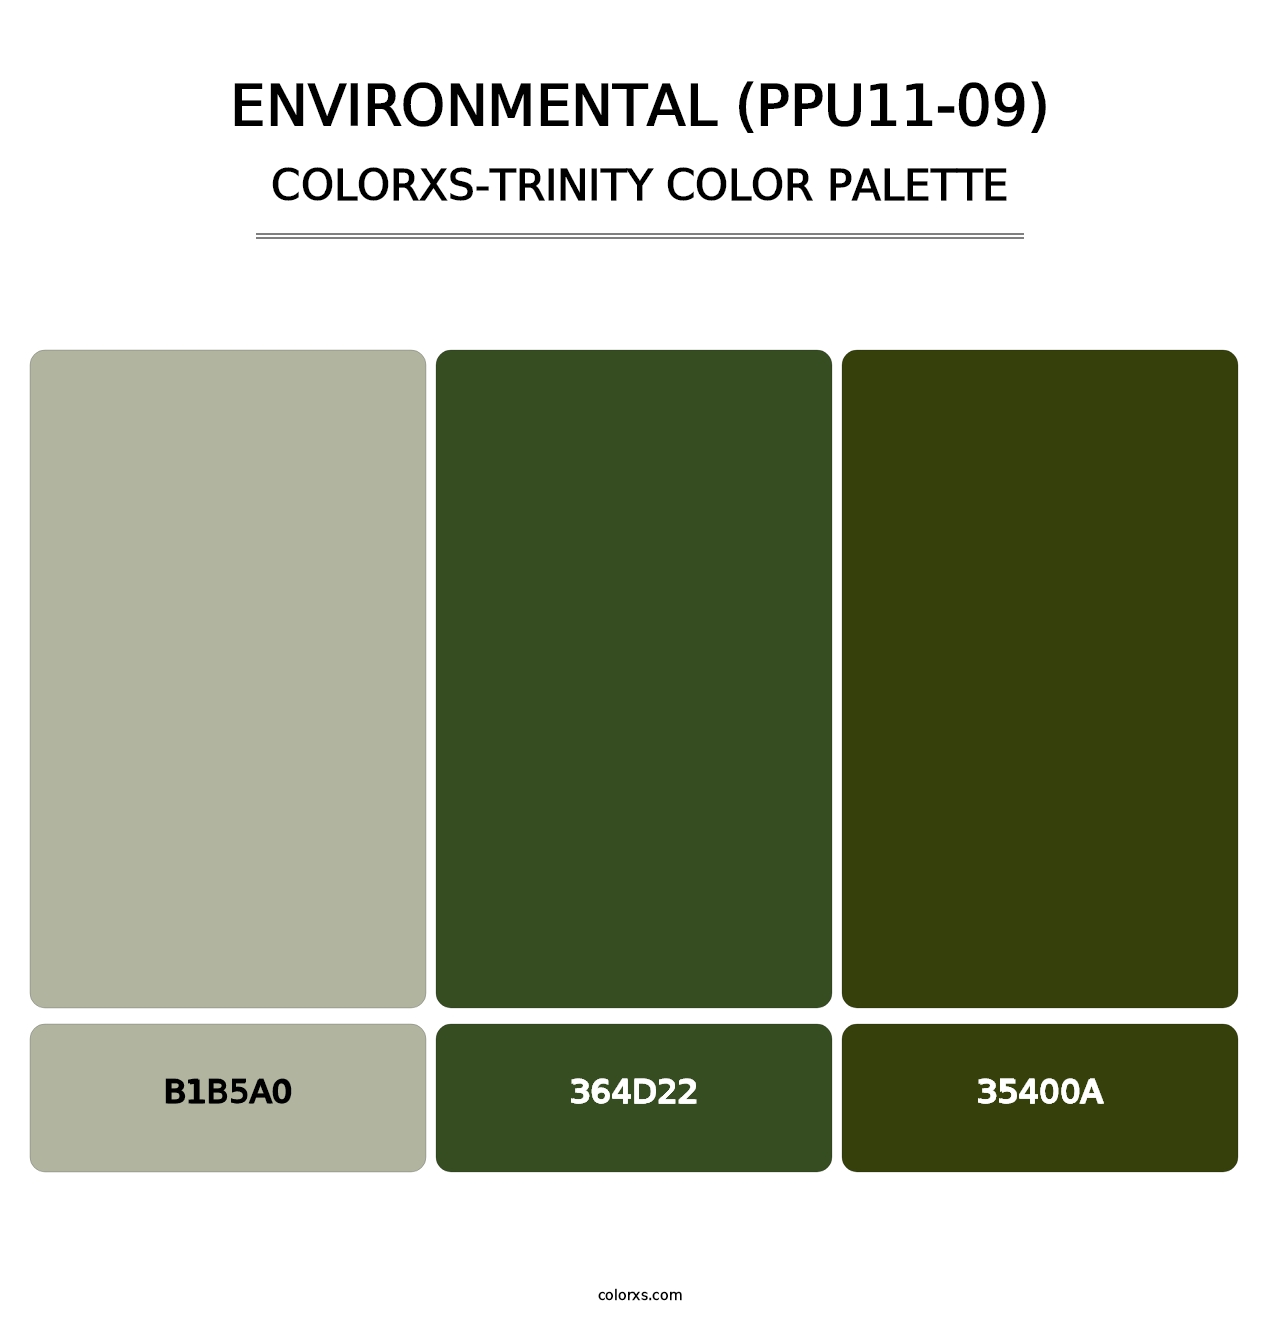 Environmental (PPU11-09) - Colorxs Trinity Palette